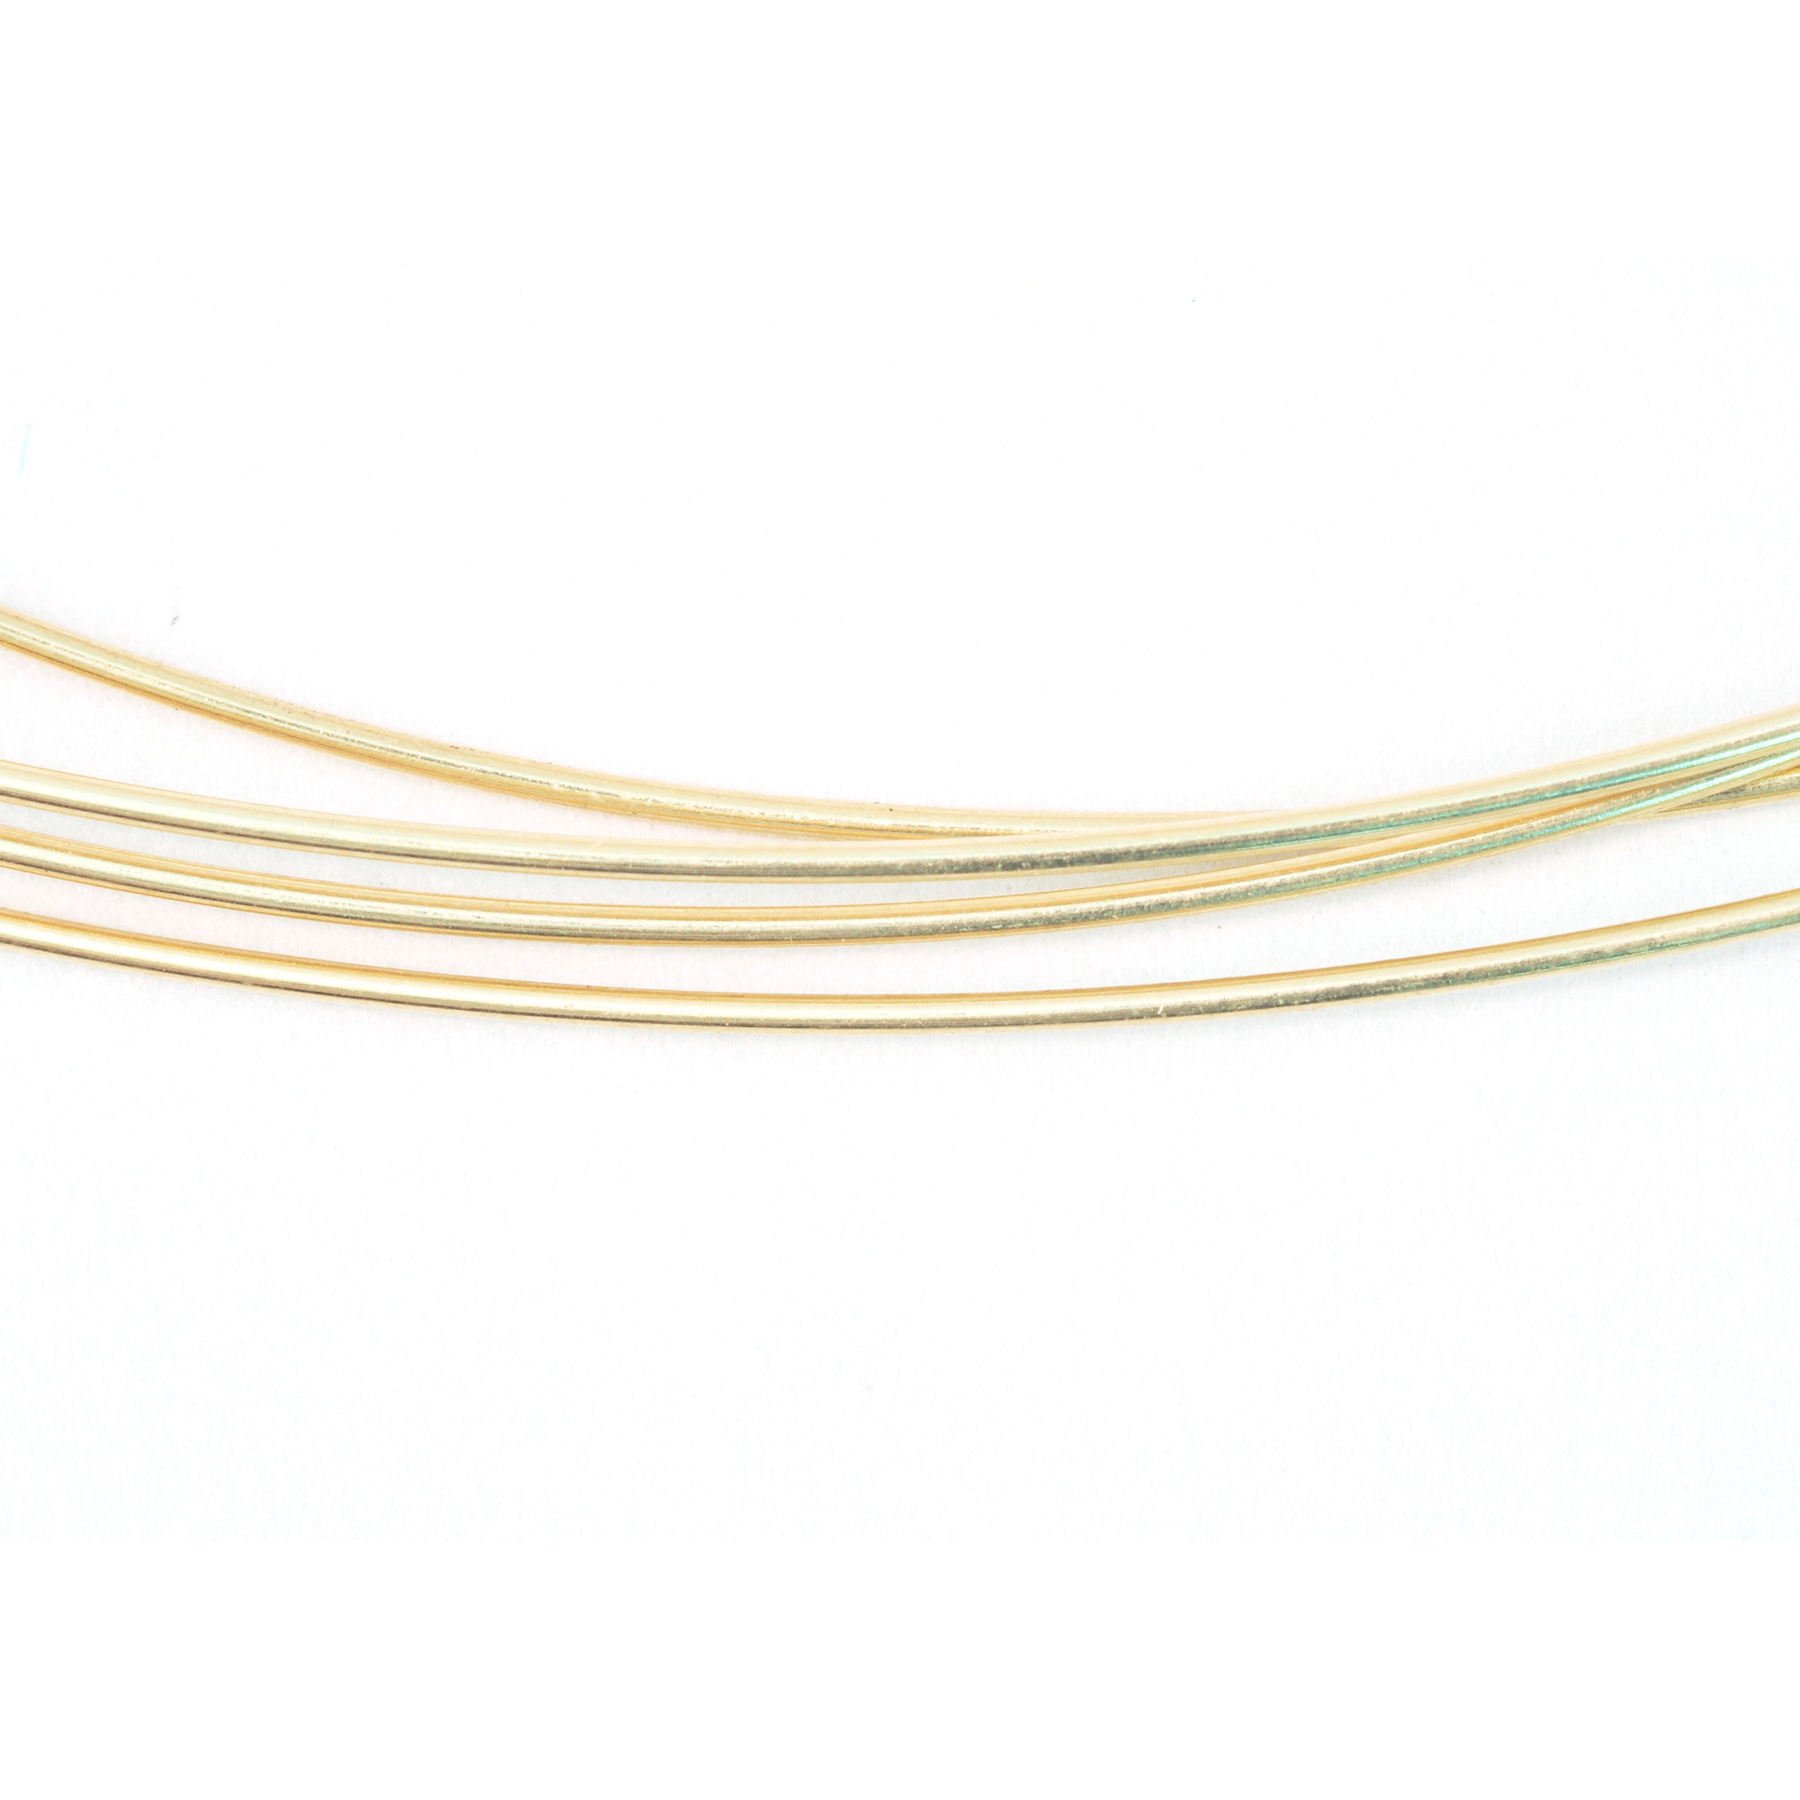 Solid 14K Gold Solder Wire Super Easy Easy medium Density .071 DWT